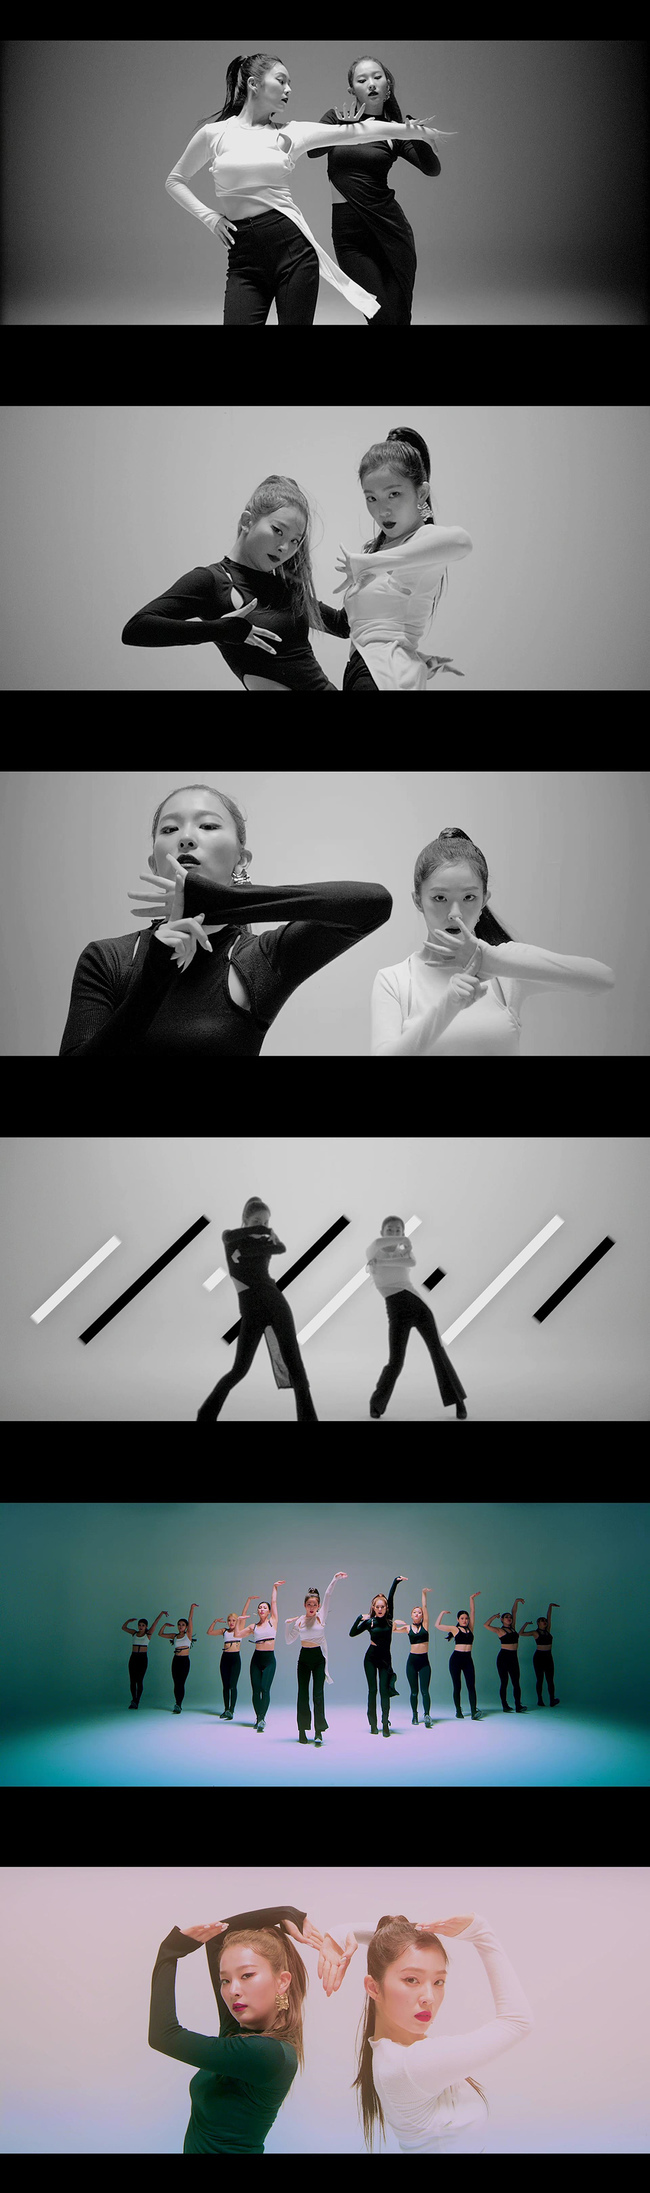 naughty-dance-choreography-amazes-netizens-1